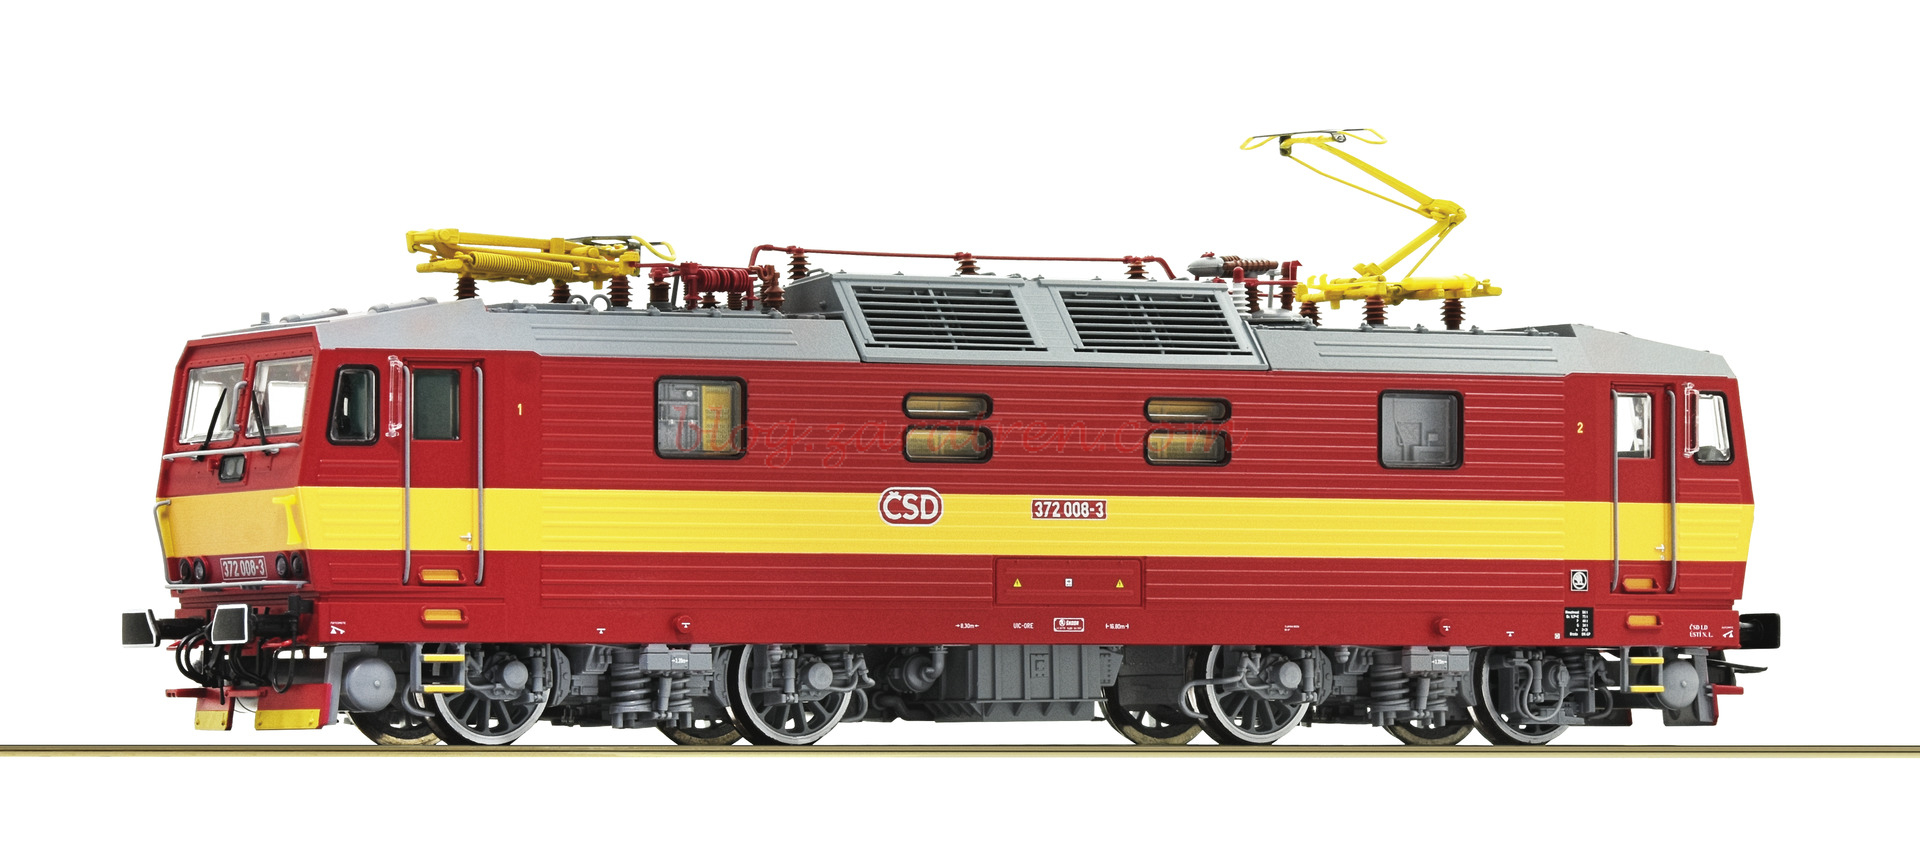 Roco – Locomotora eléctrica Serie 372, CSD, Analogica, Escala H0. Ref: 71221.